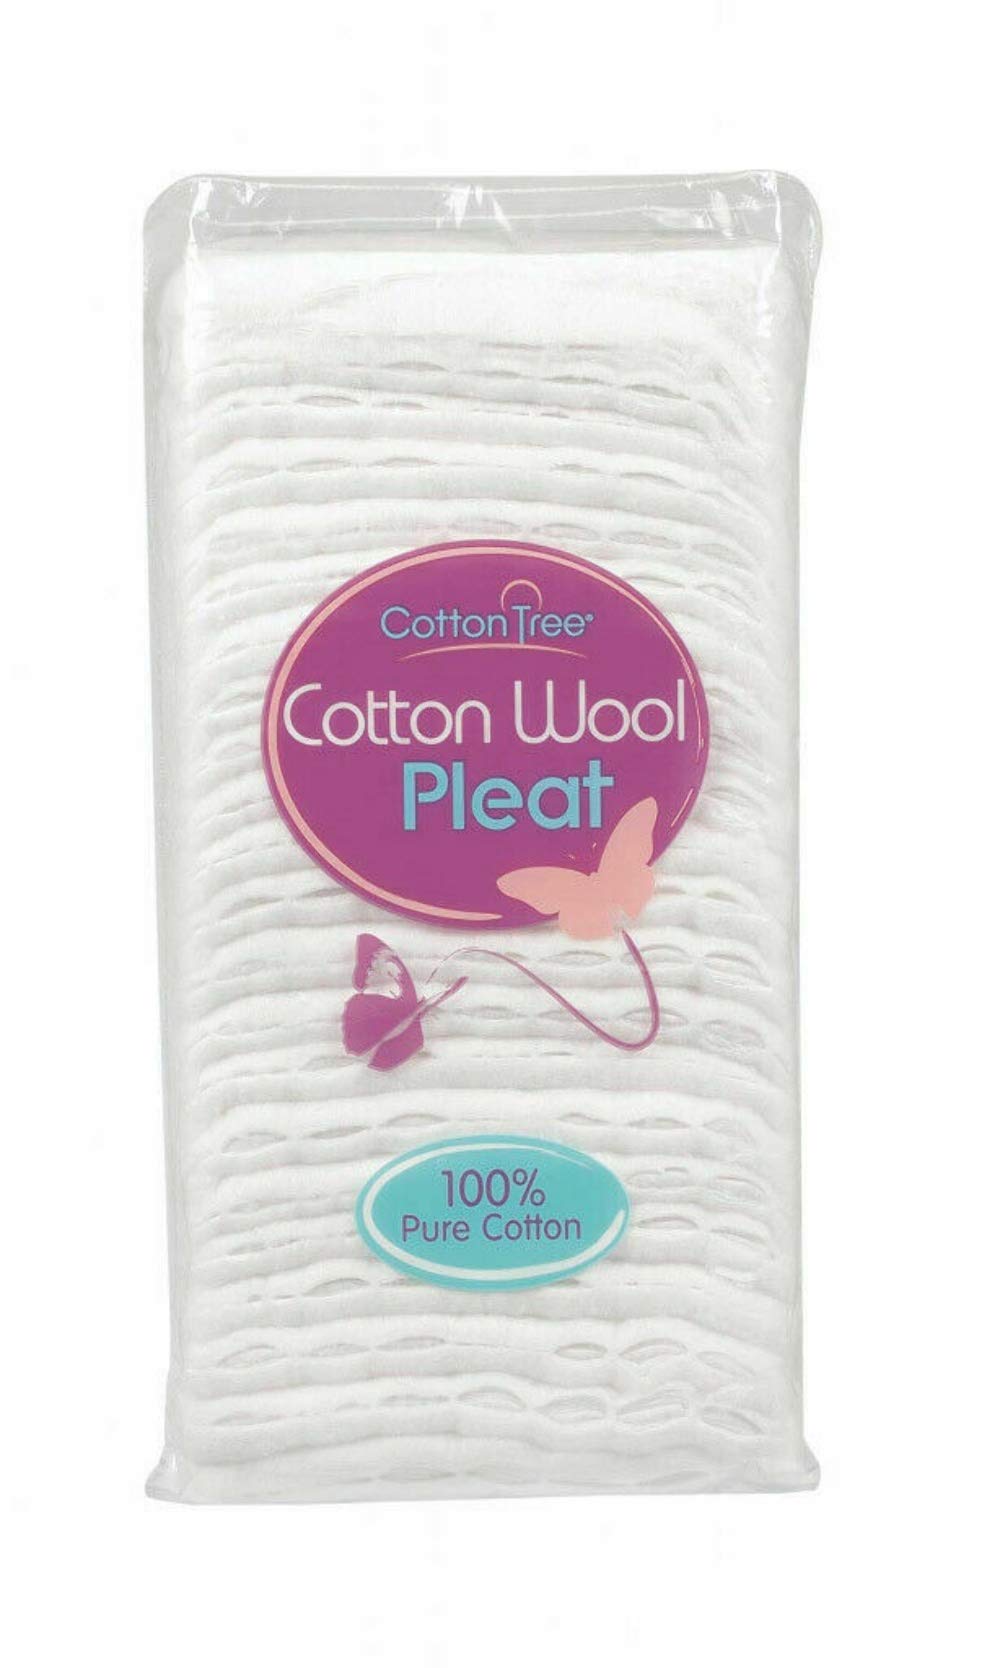 Cotton Tree 100% Pure Cotton, Super Soft Cotton Wool Pleat, White